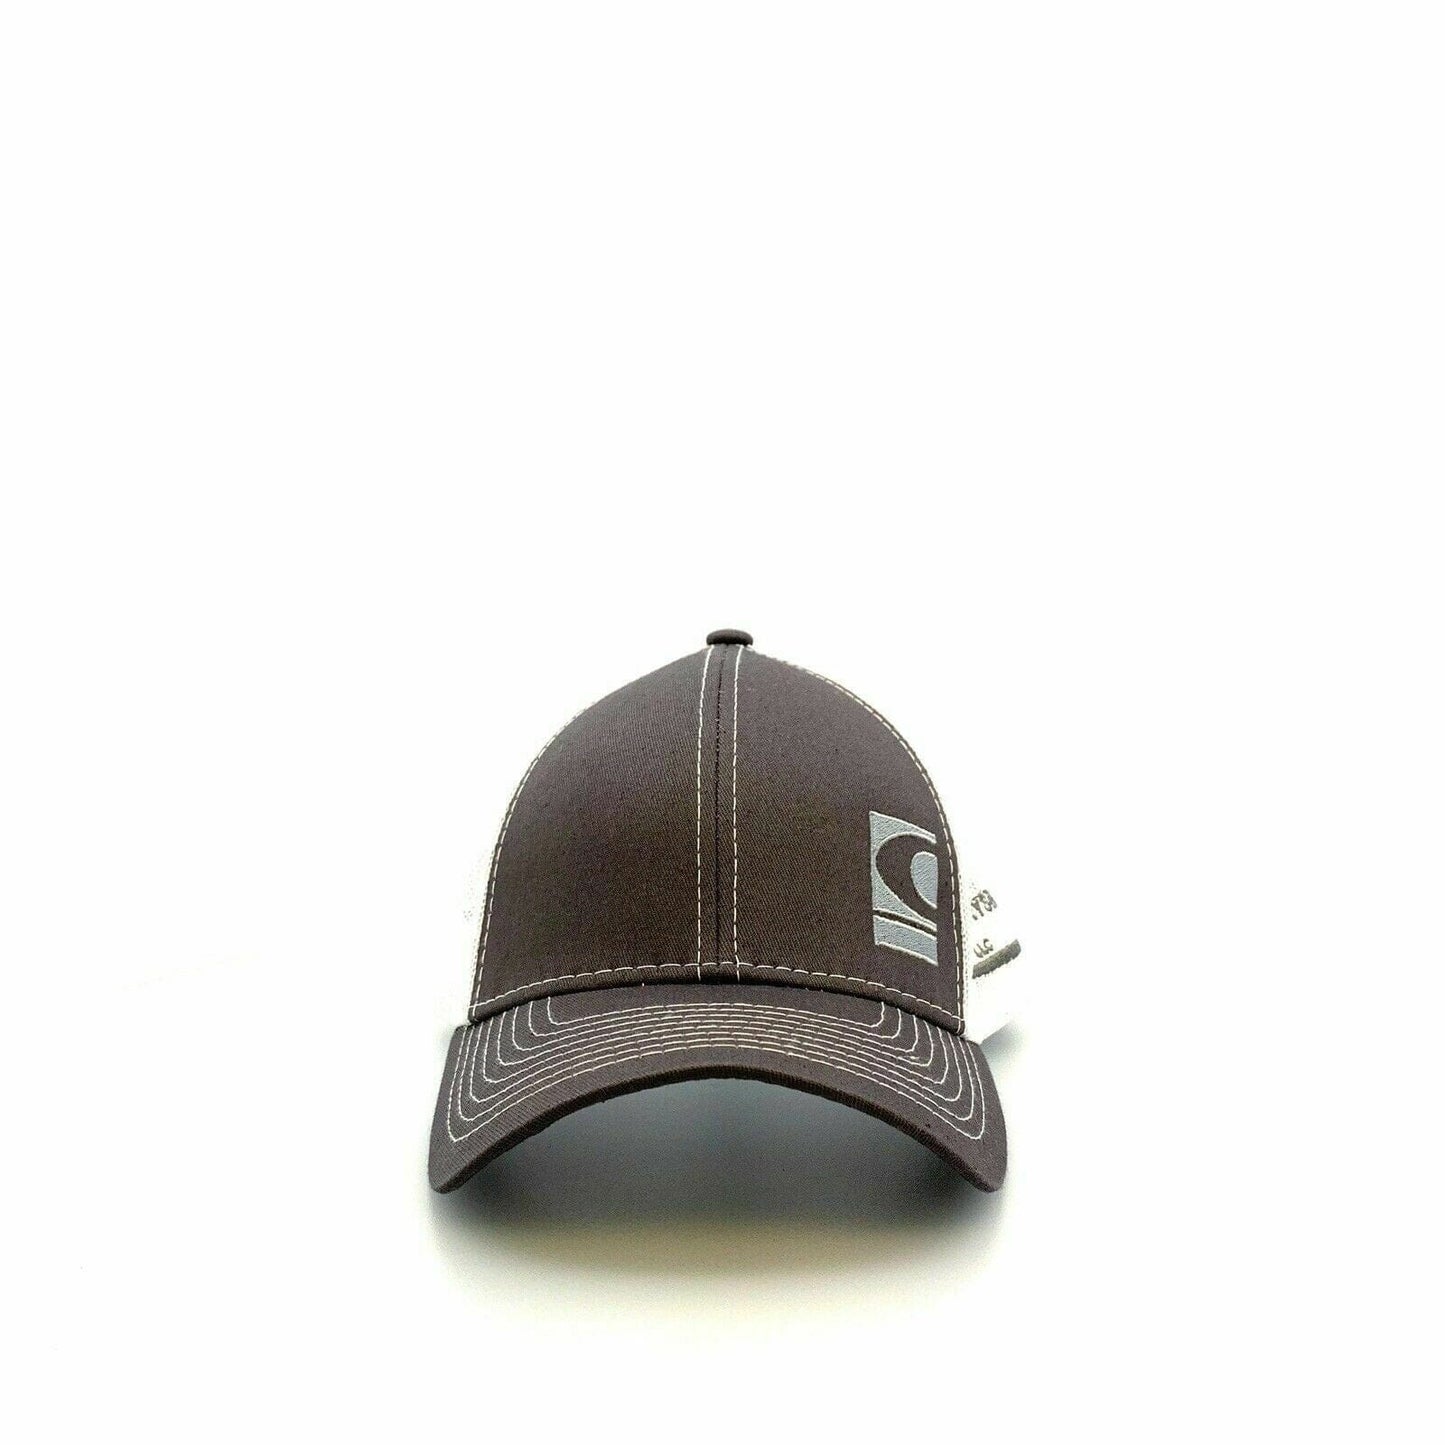 Countryside Feed LLC Mens Mesh SnapBack Trucker Hat, Gray / White - OSFA